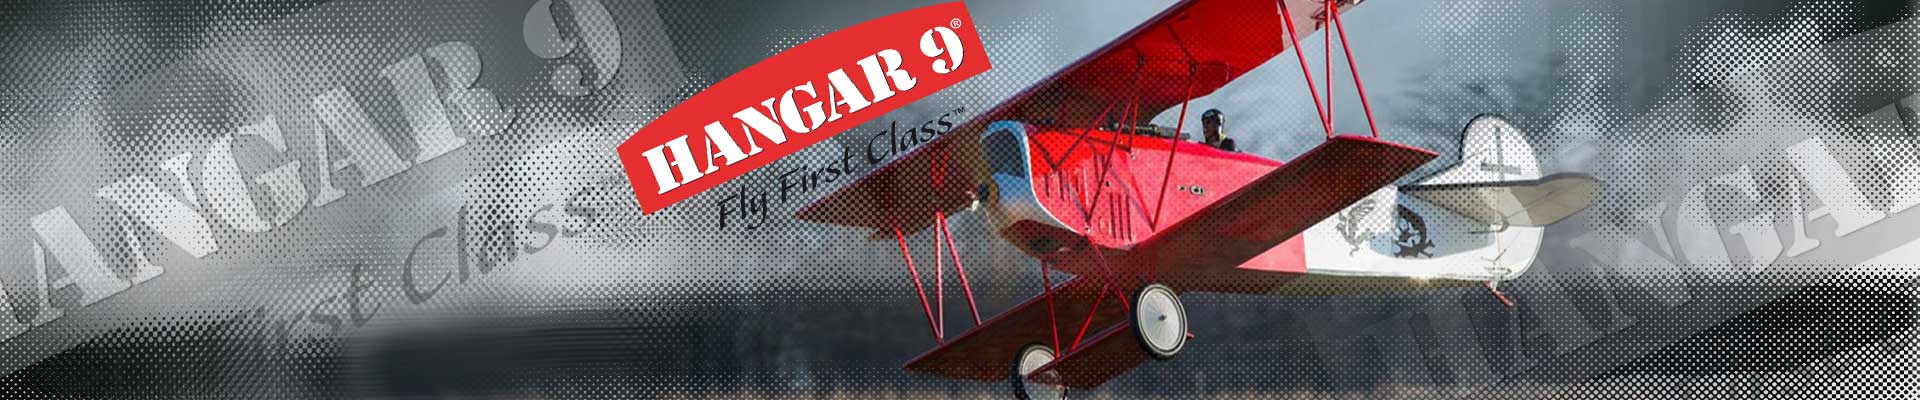 hangar9